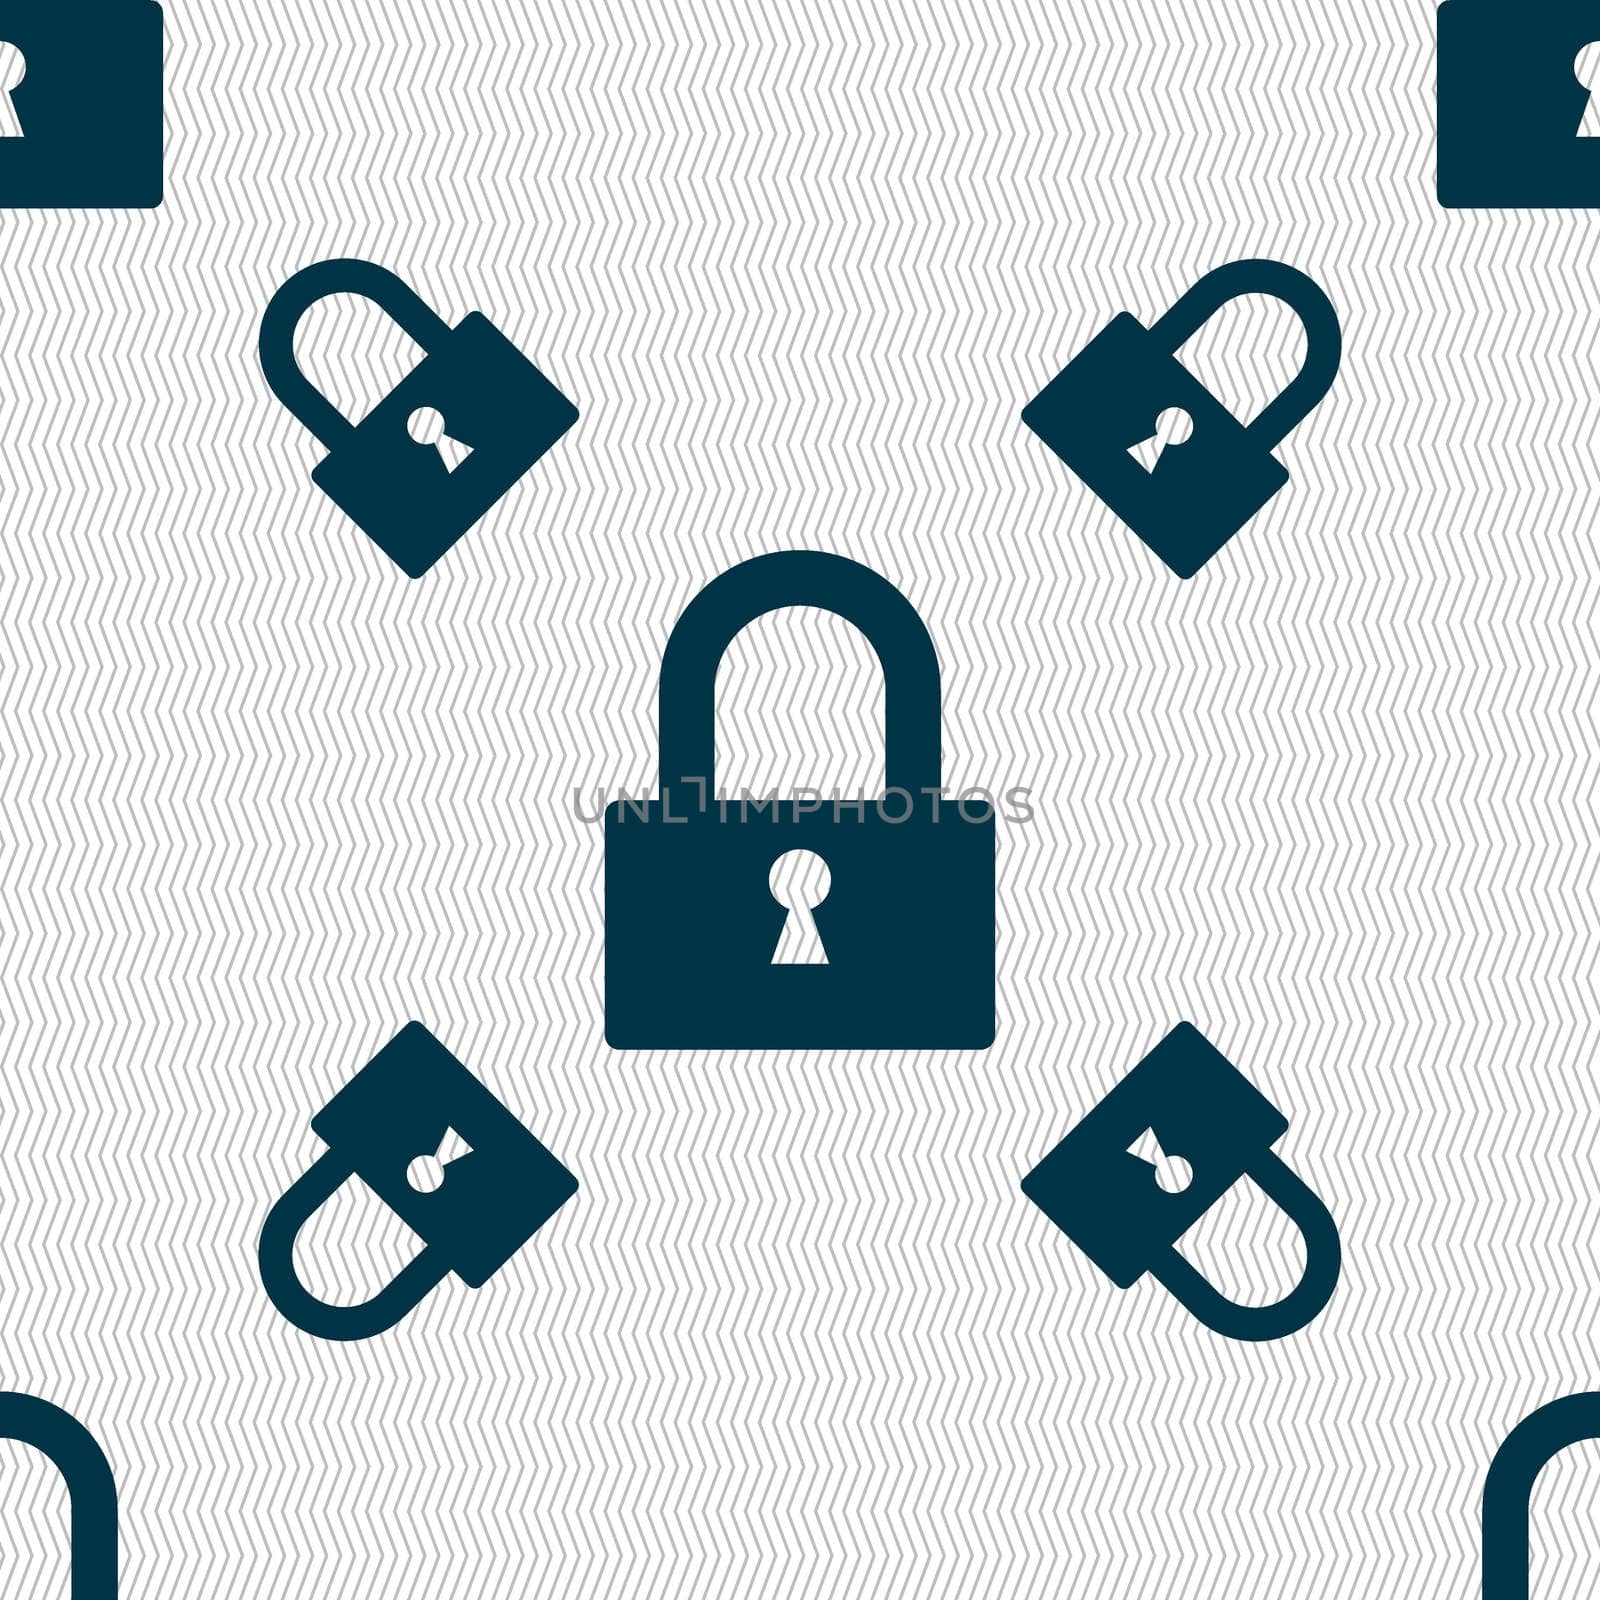 Lock sign icon. Locker symbol. Seamless pattern with geometric texture. illustration